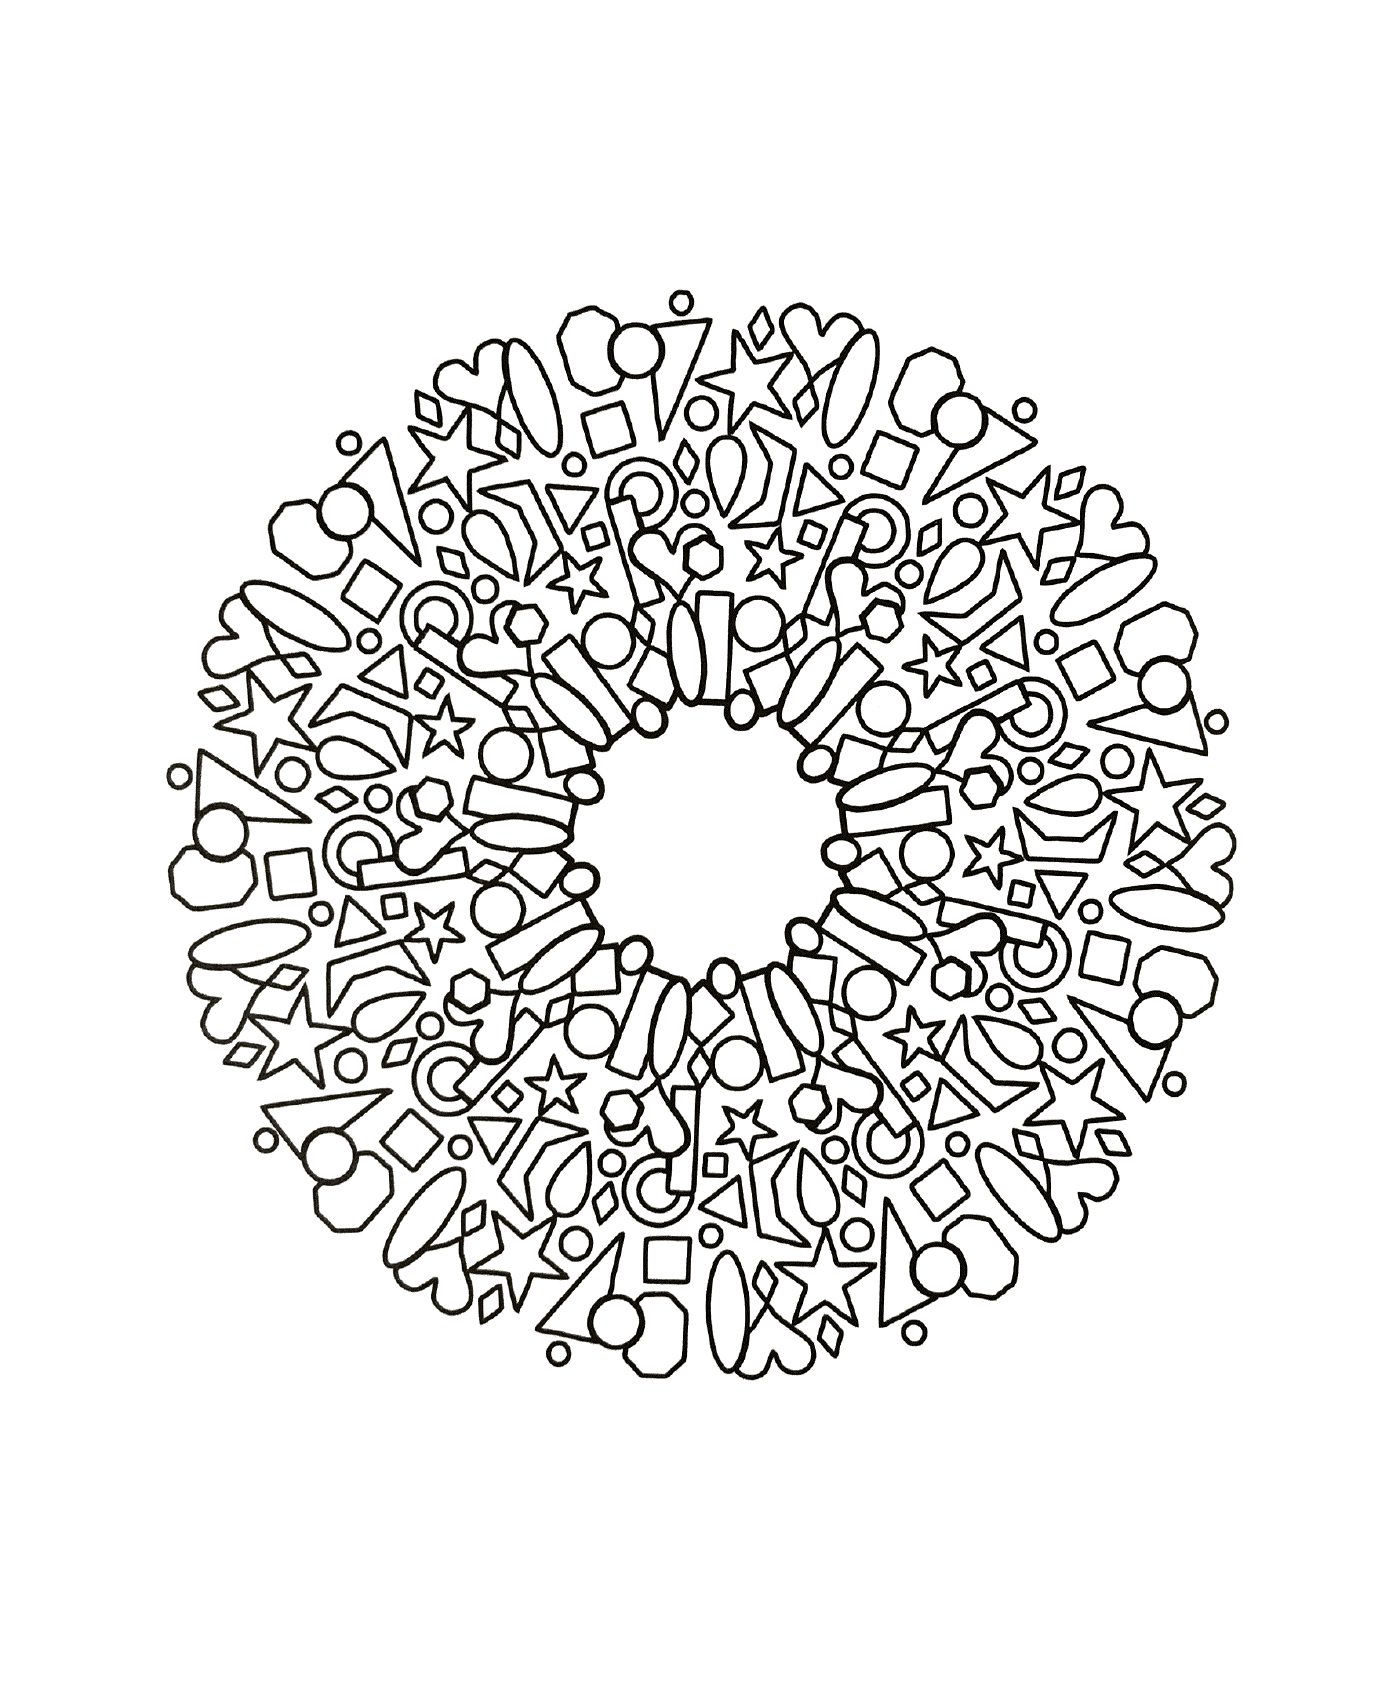  Modelo circular de várias formas 